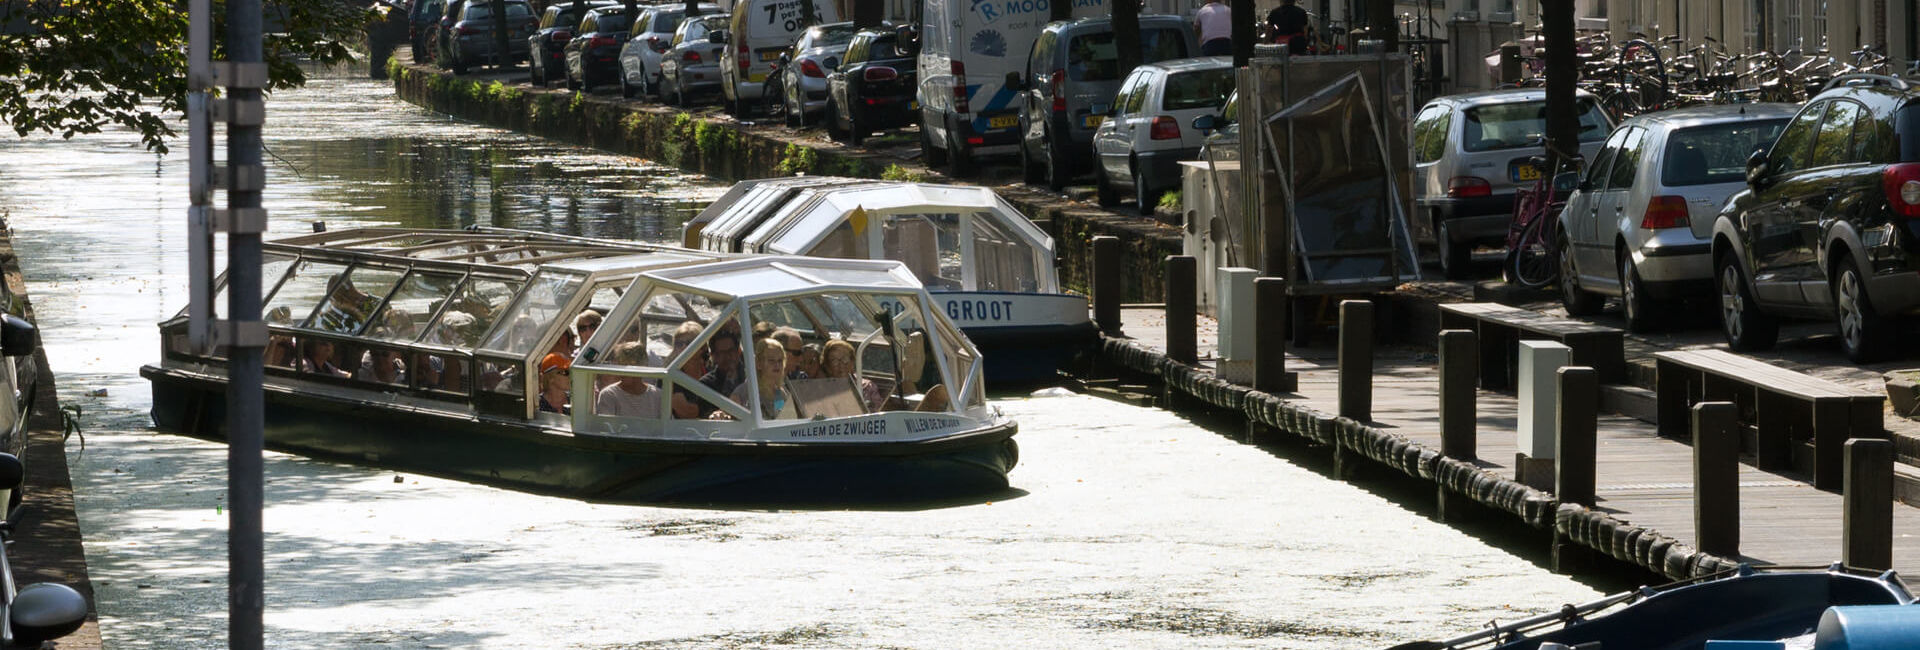 Canal boats in one of the Delft canals  - Explore Delft - Gasterij 't Karrewiel